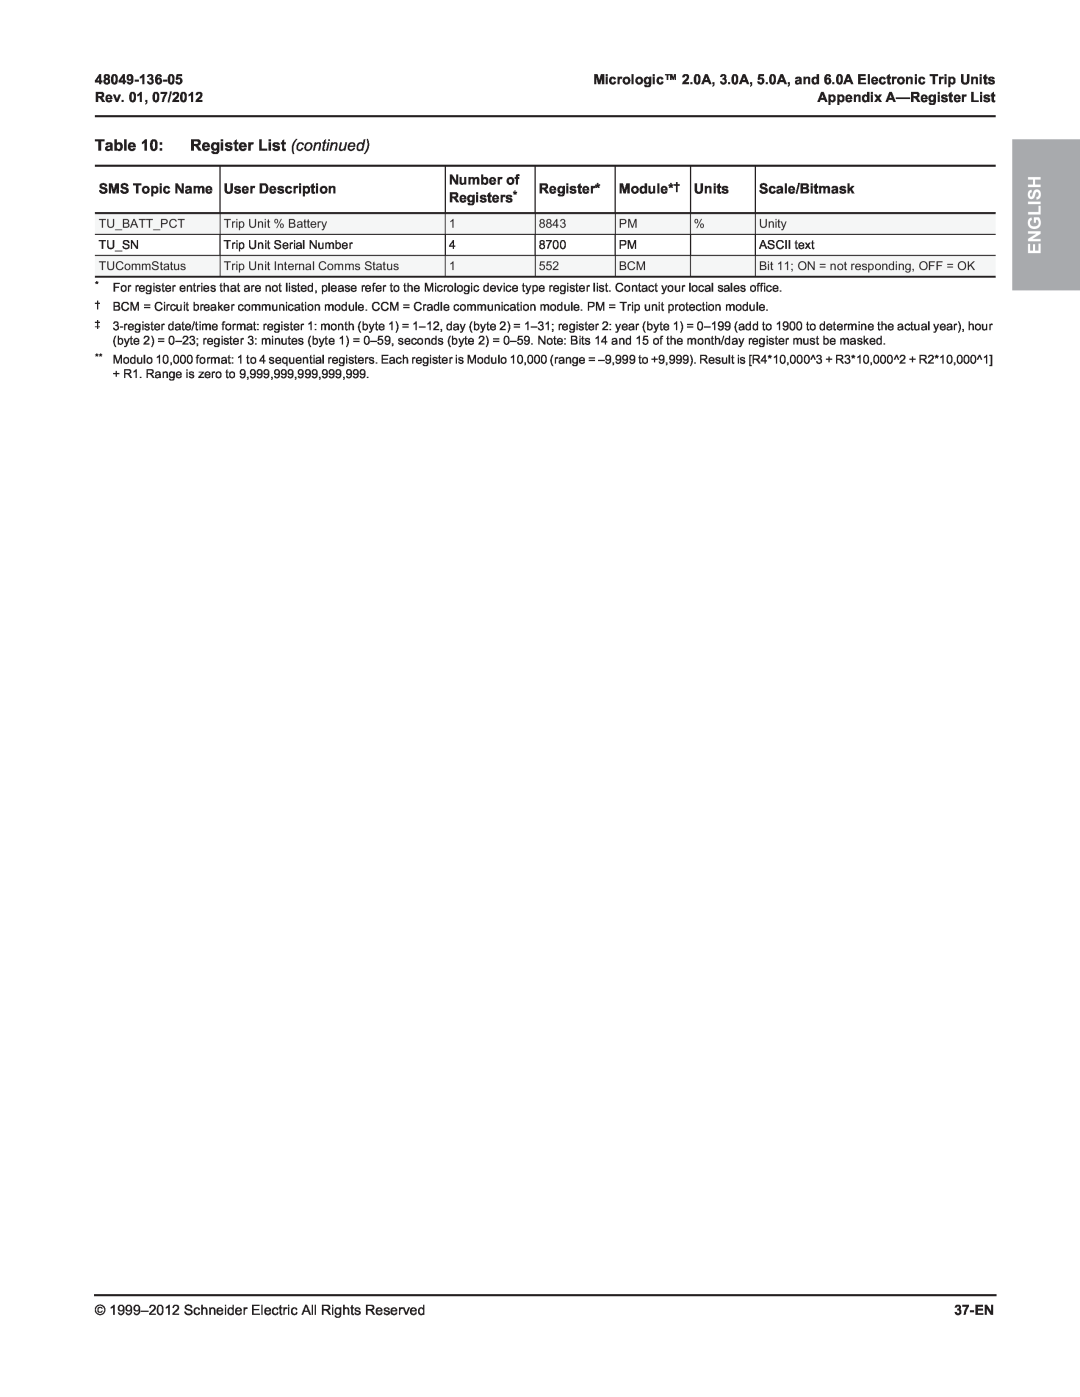 Schneider Electric 5.0A Register List continued, English, 48049-136-05, Rev. 01, 07/2012, Appendix A-Register List, Units 